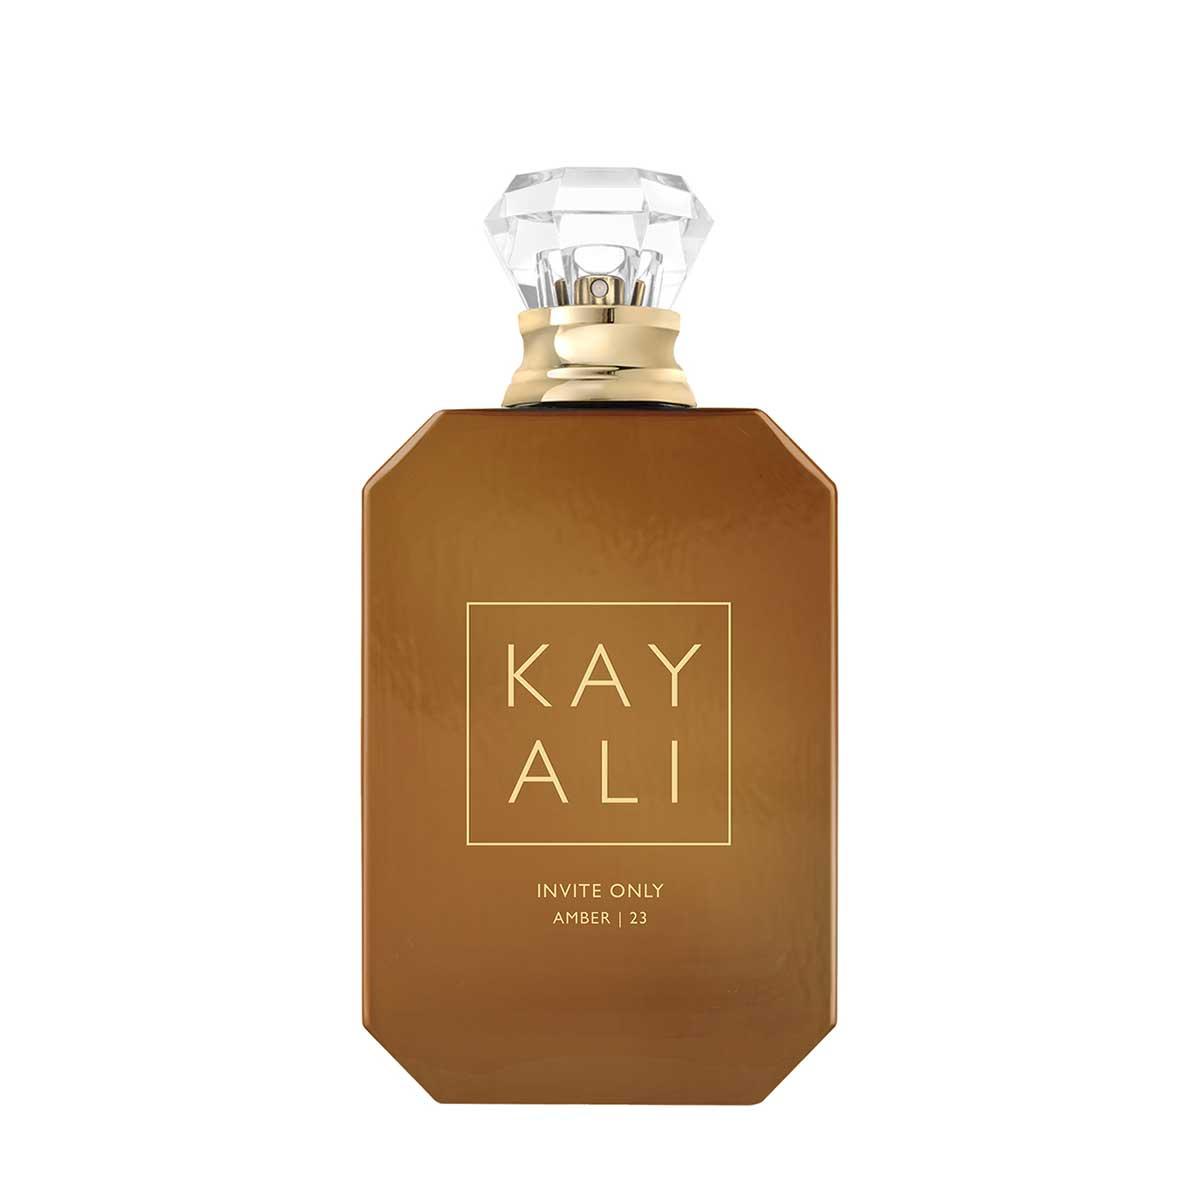 Kayali Invite Only Amber | 23 Eau de Parfum Intense 50ml | SEPHORA UK